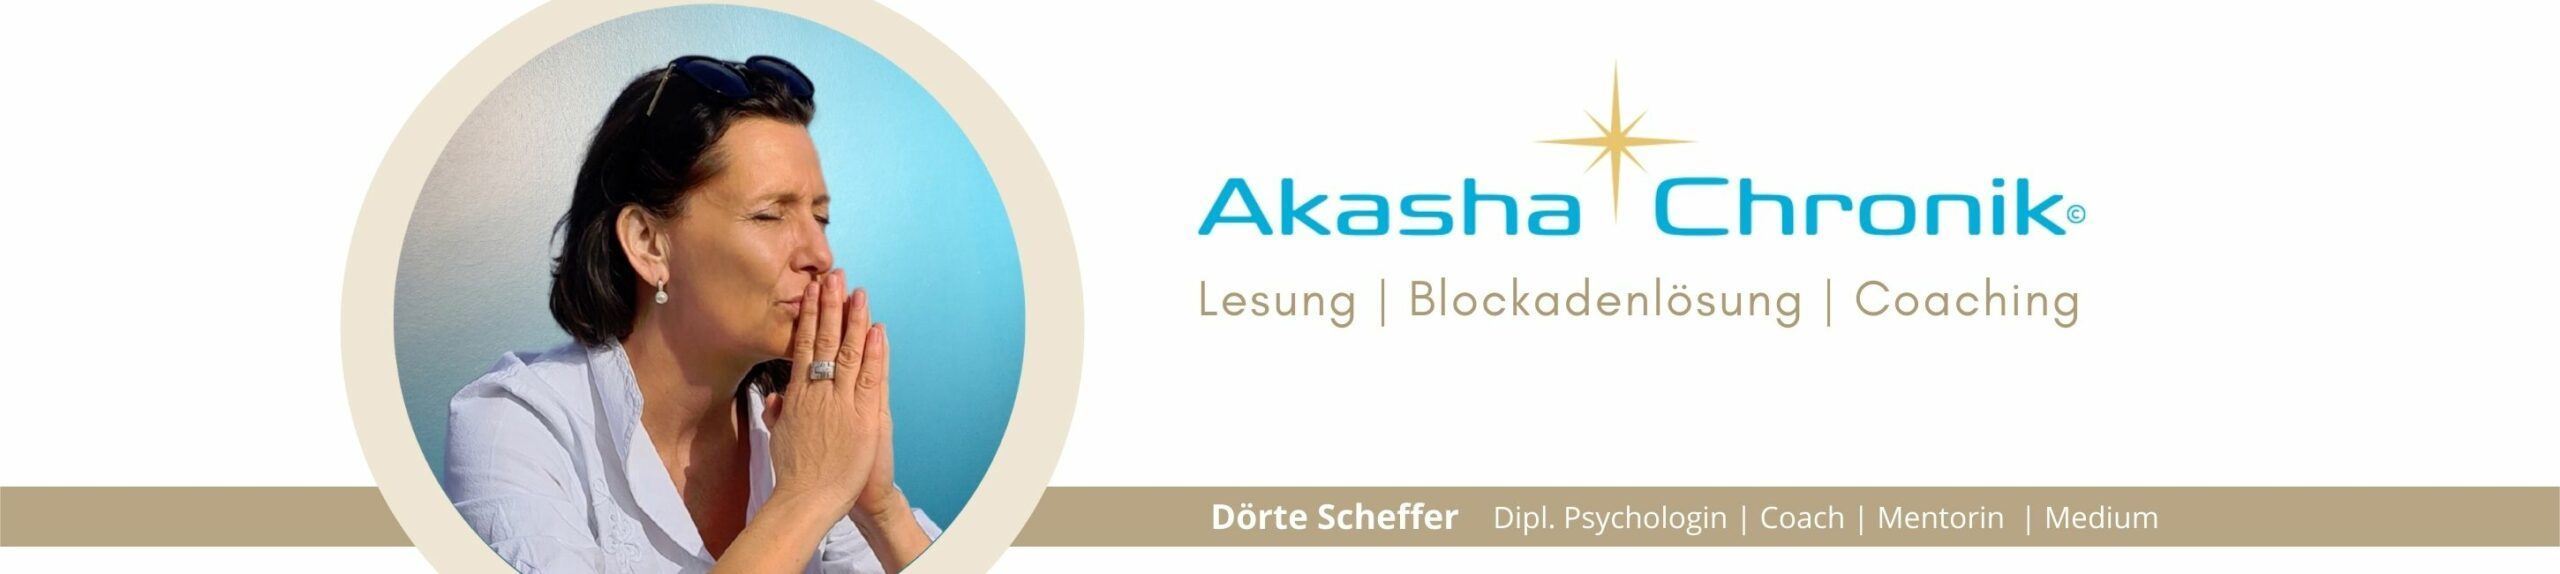 Akasha Chronik Lesung Coaching Blockadenlösung